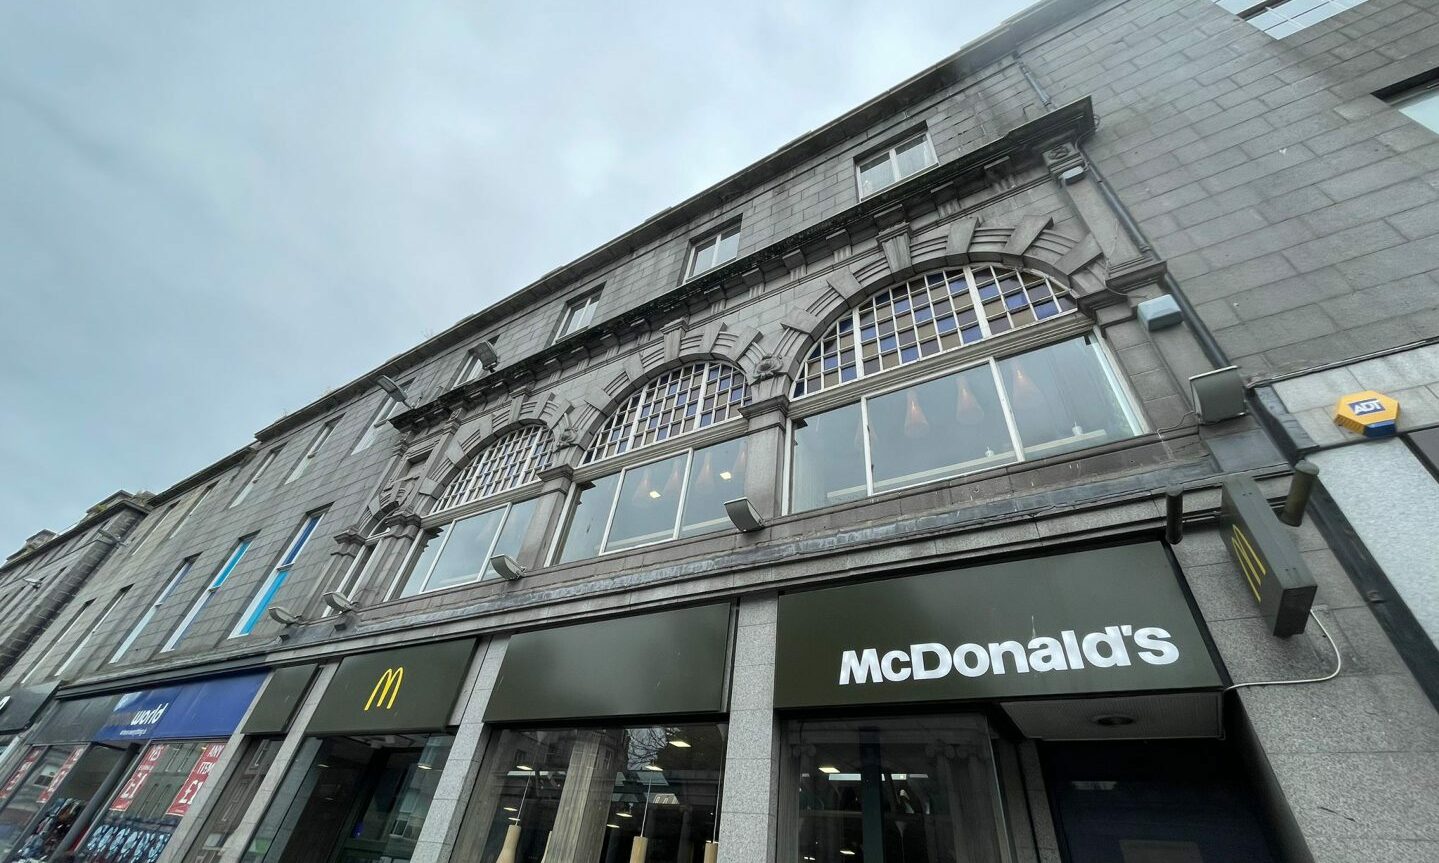 The distinctive McDonald's building